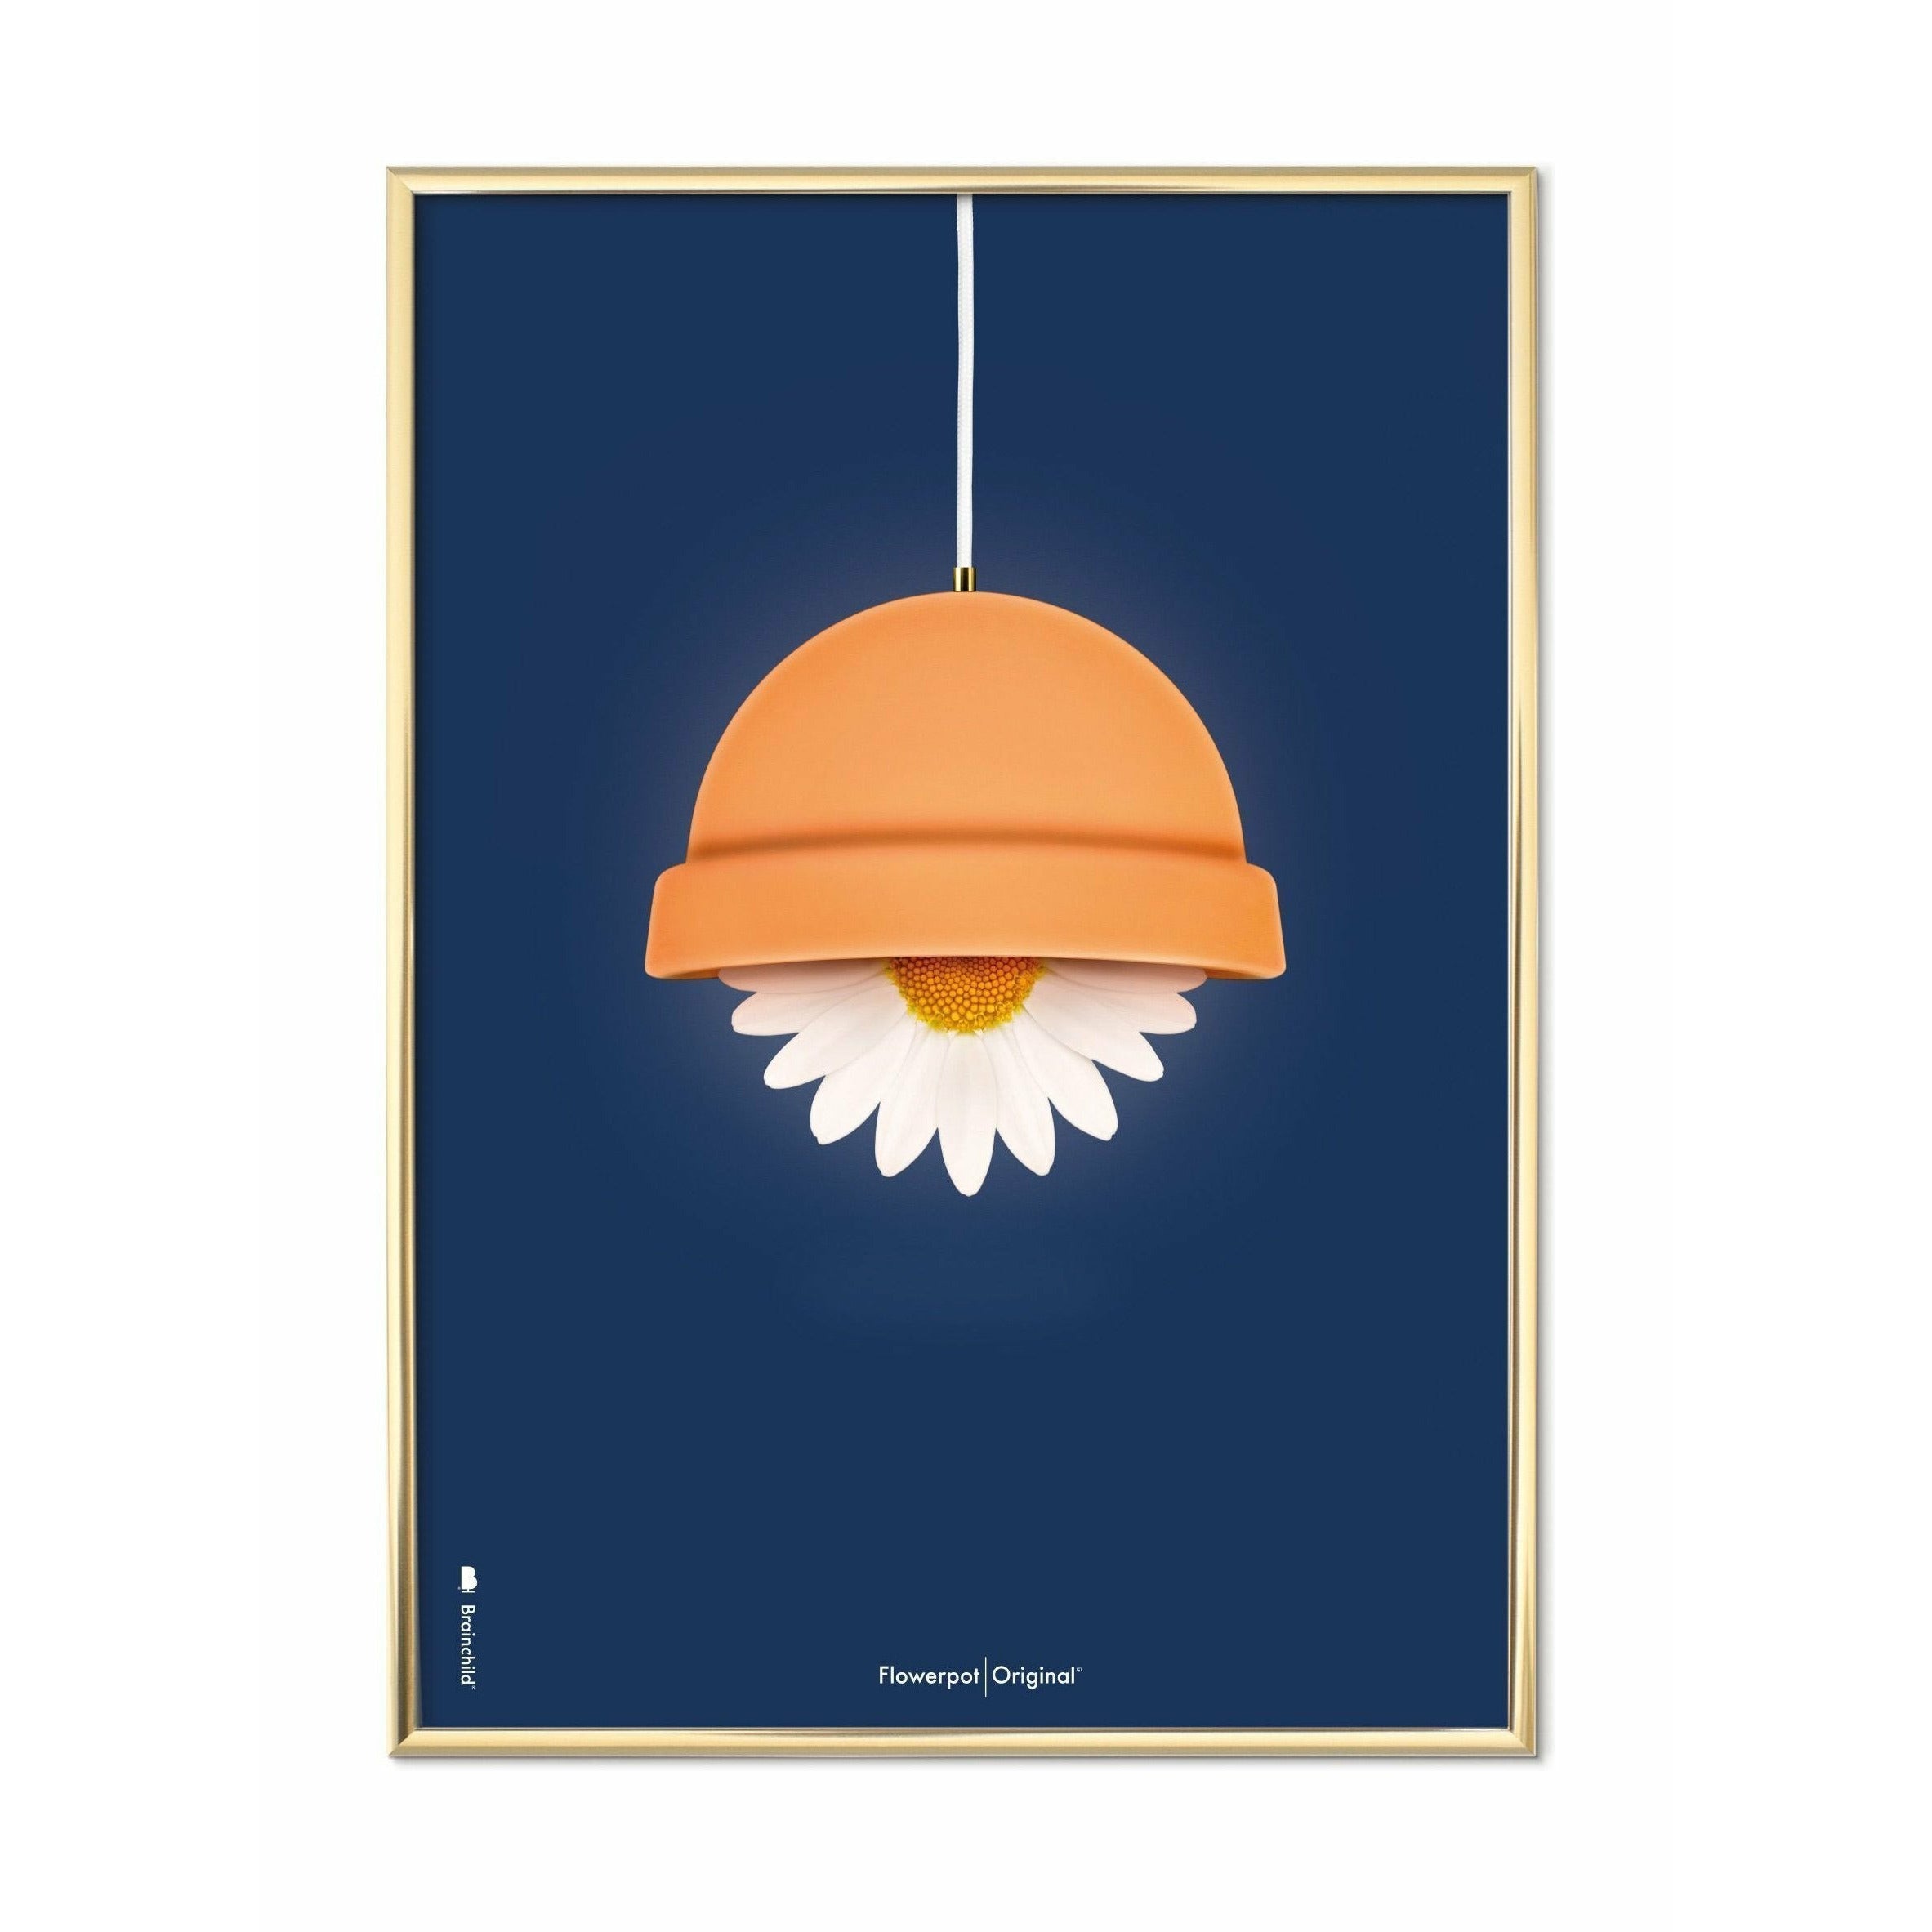 brainchild Flowerpot Classic Poster, messing gekleurd frame 30x40 cm, donkerblauwe achtergrond